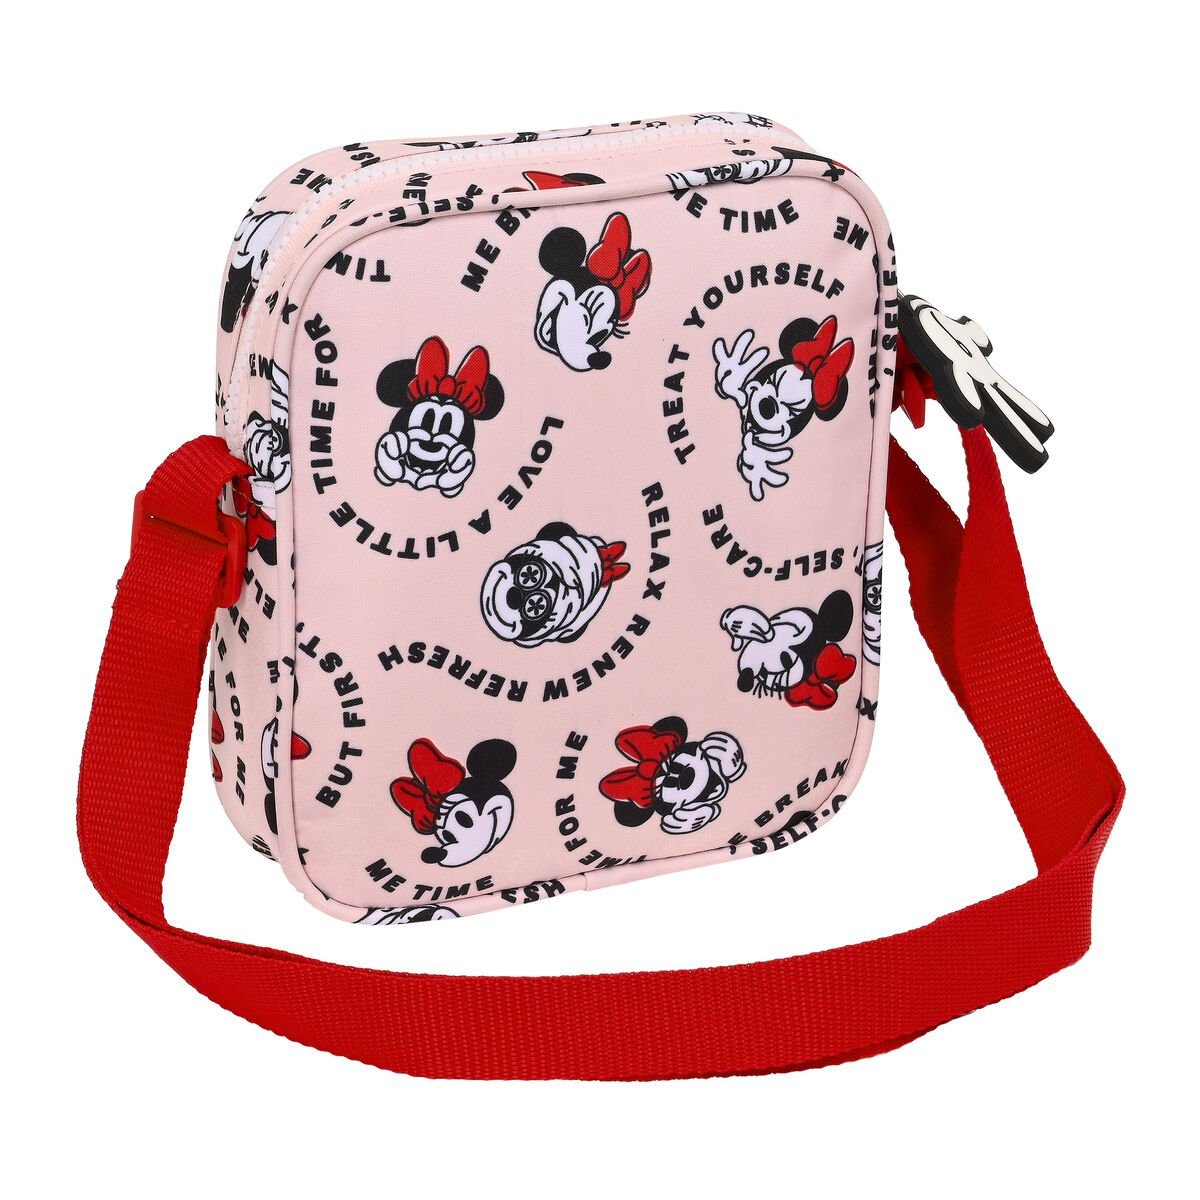 Disney Minnie Mouse Handtasche Umhängetasche 16 18 Mouse x time cm 4 Me Minnie x